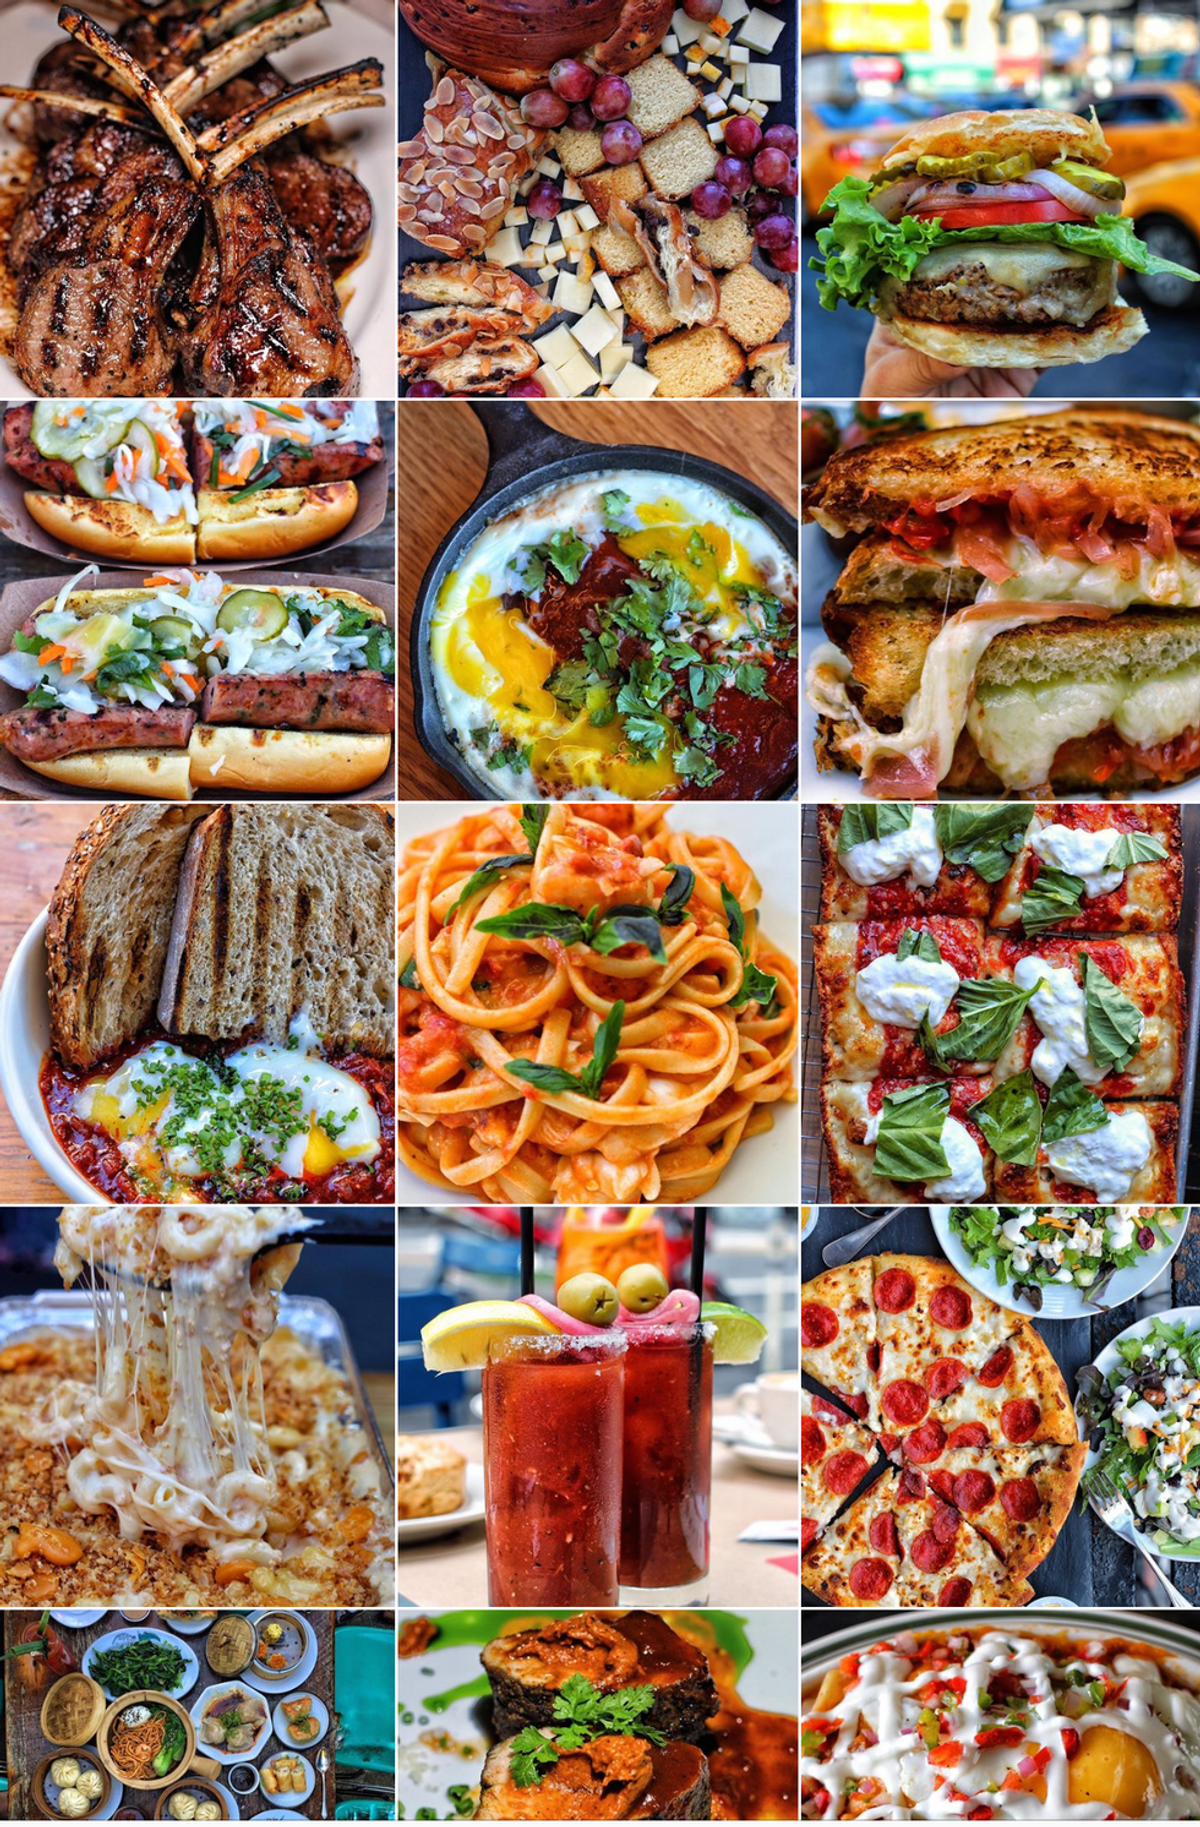 Top 5 Instagram Foodies of 2016